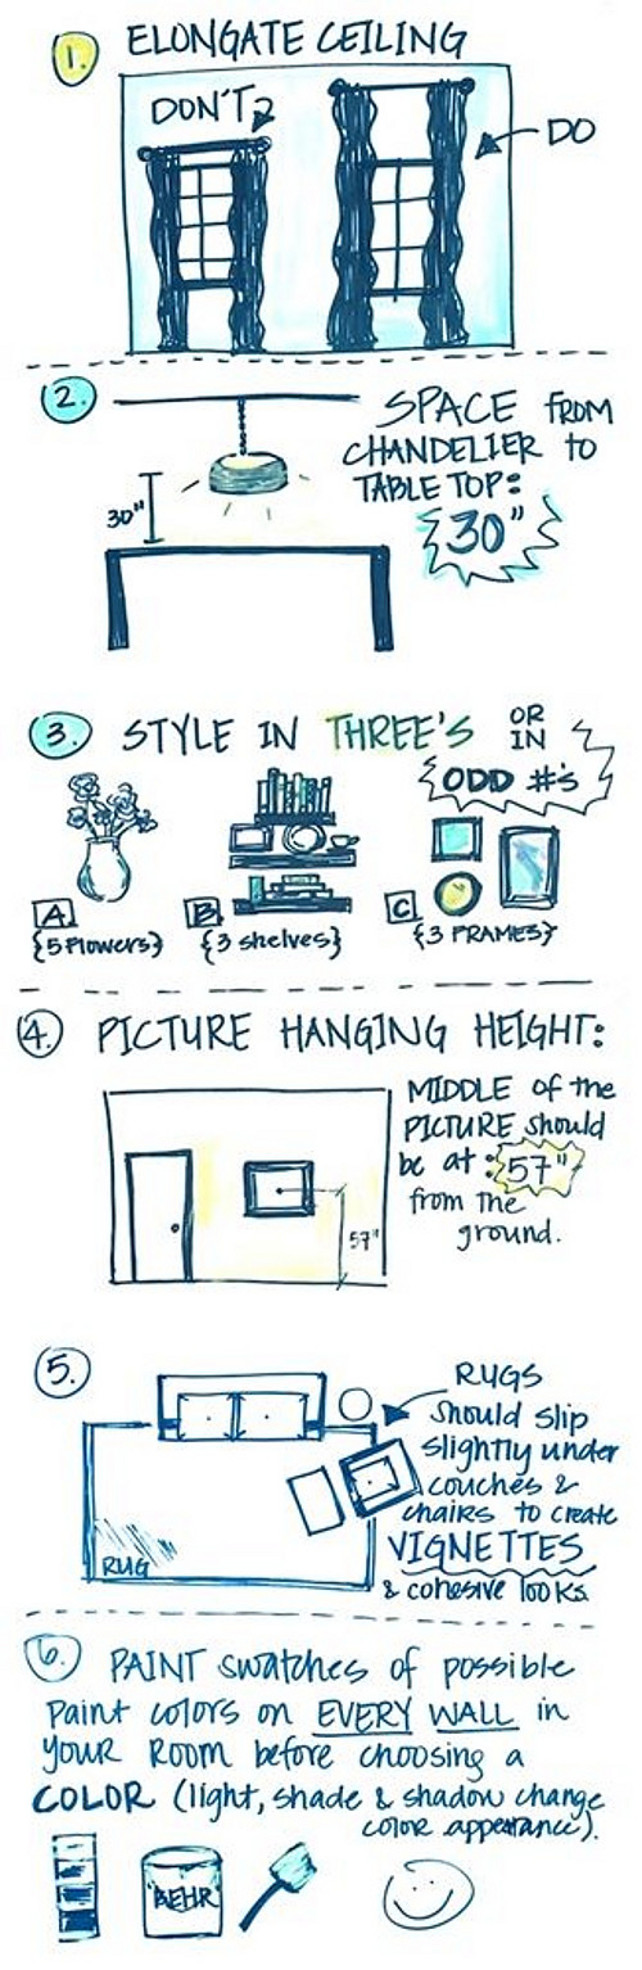 Interior-Design-Tricks-and-Rules_-.jpg